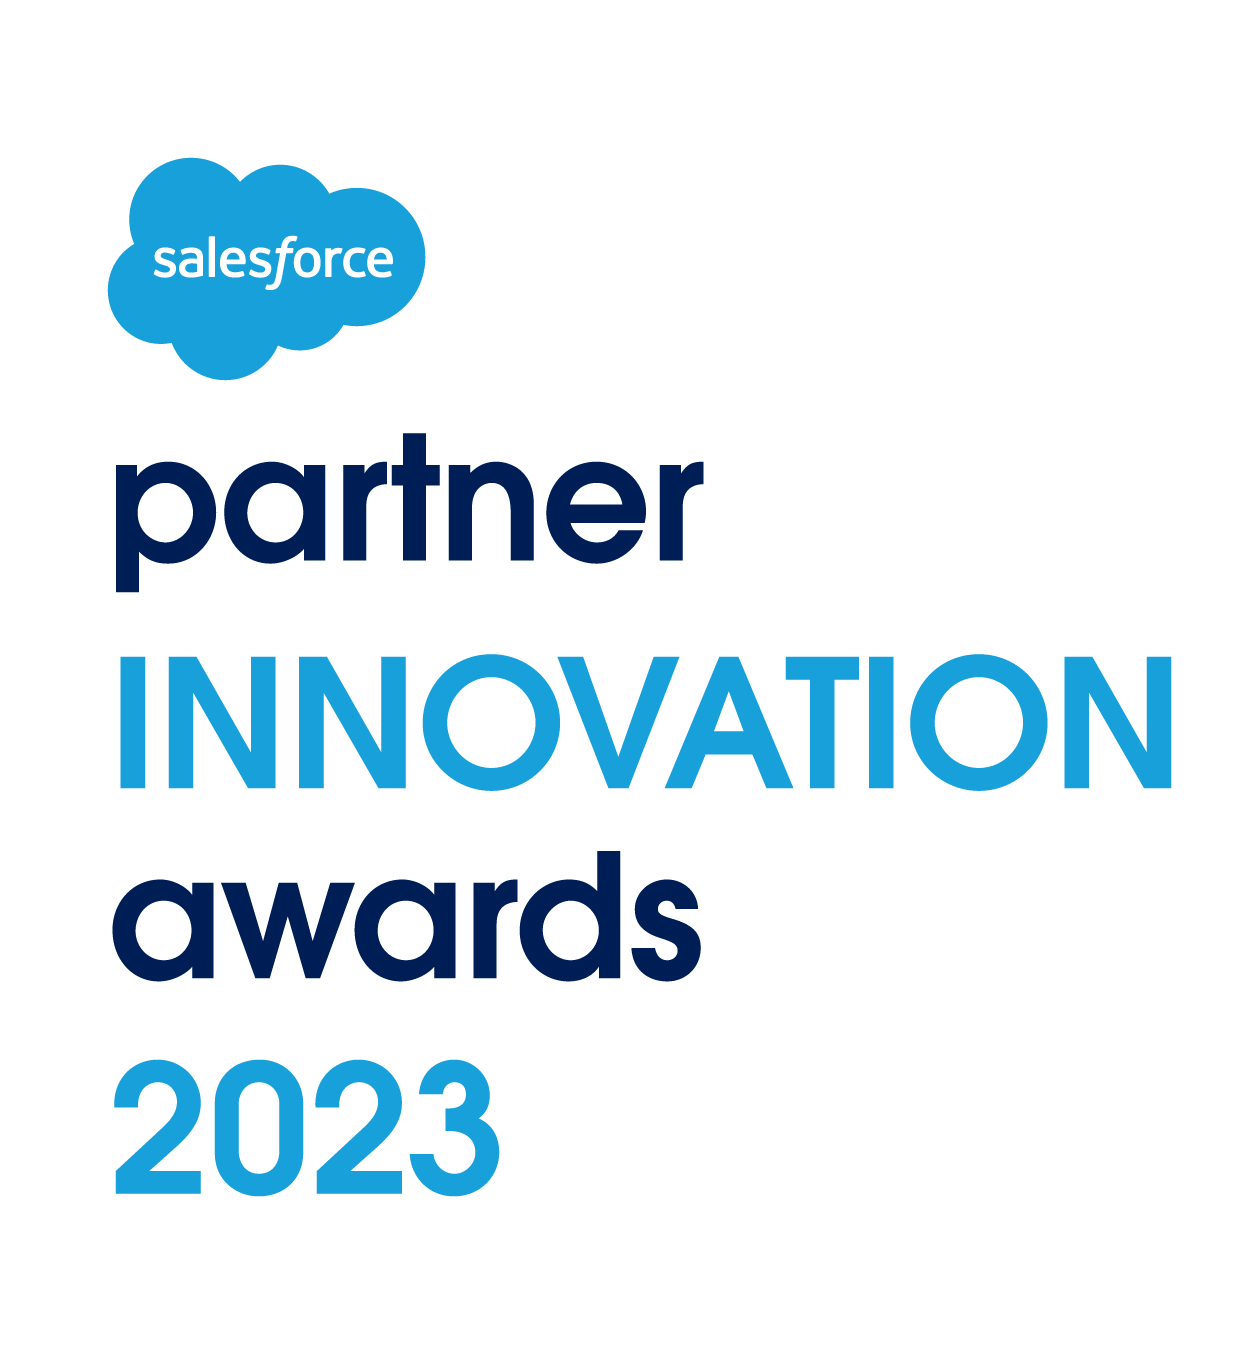 2023 Salesforce partner innovation awards.